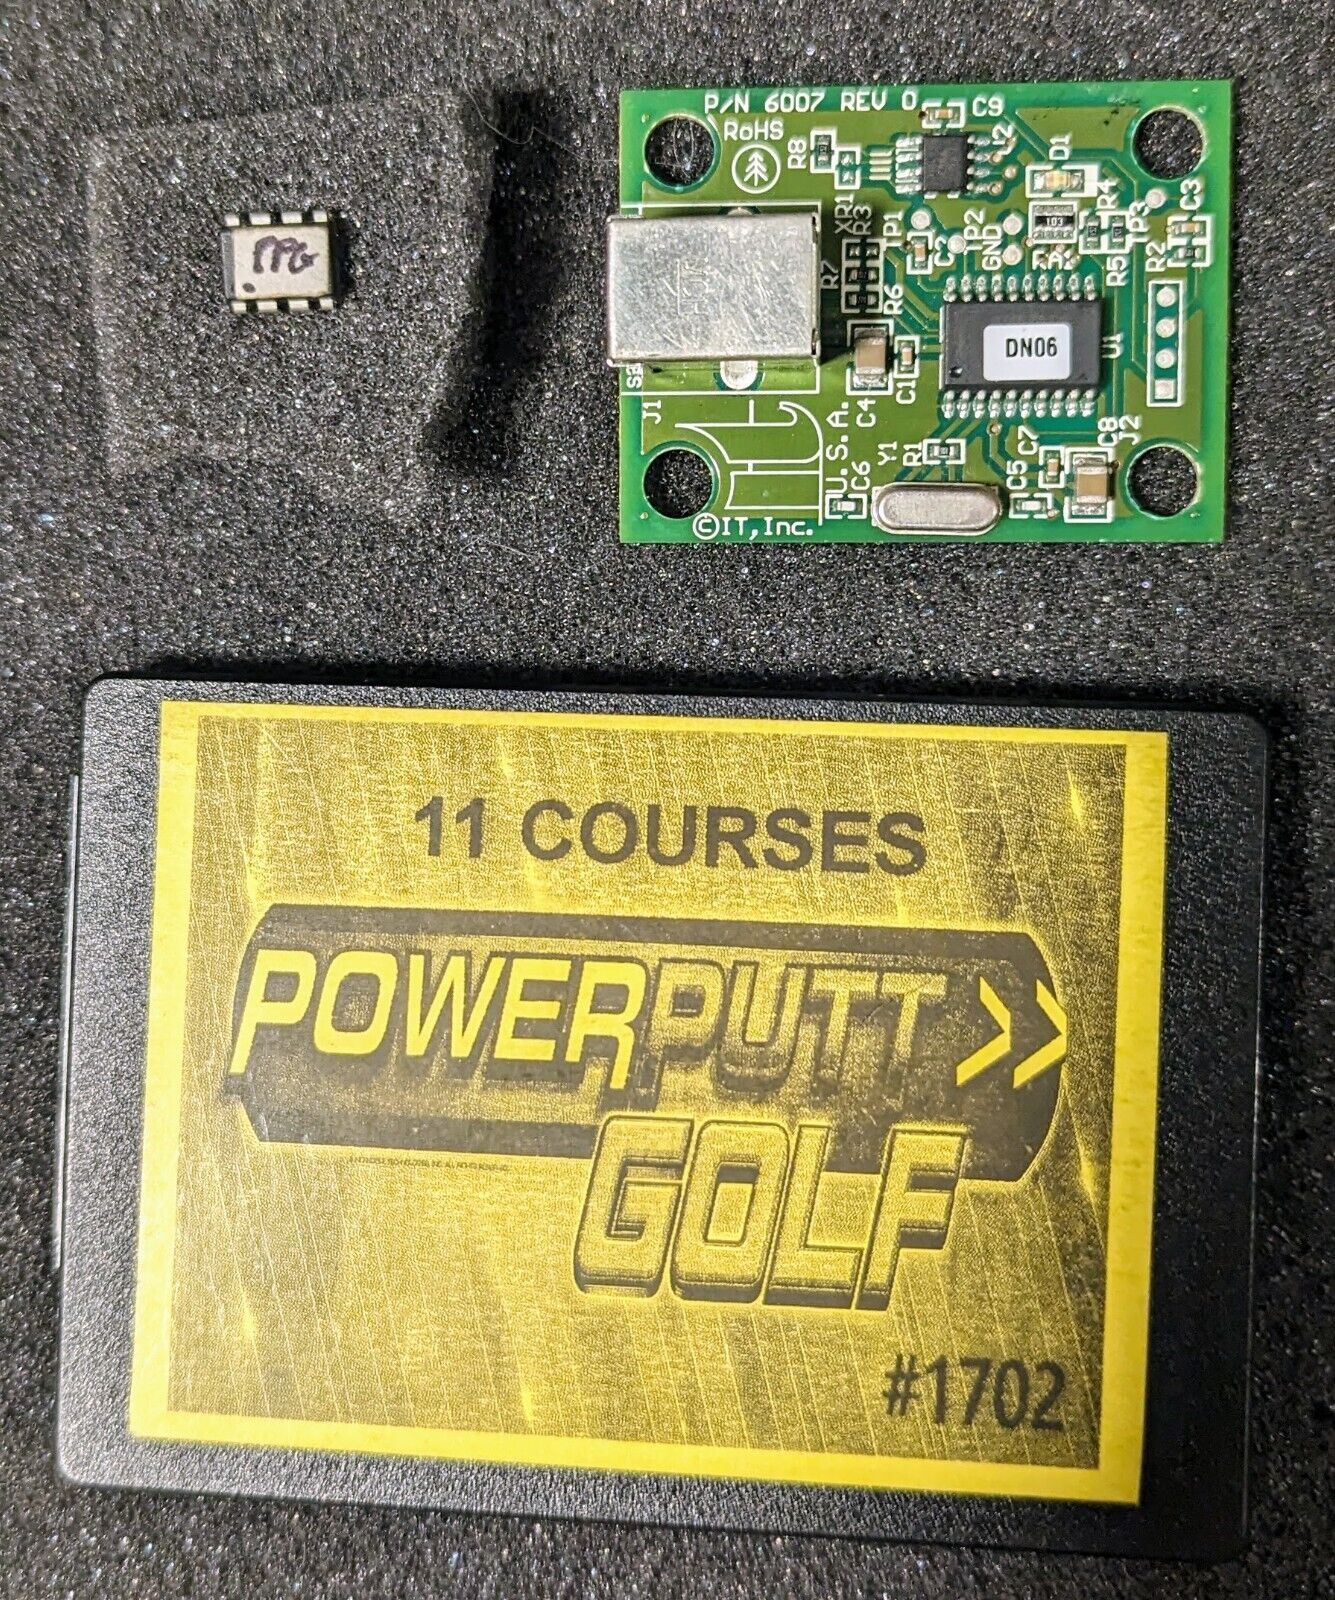 Power Putt 11 Courses + *CID #21* + Security Chip + Original SSD #1702